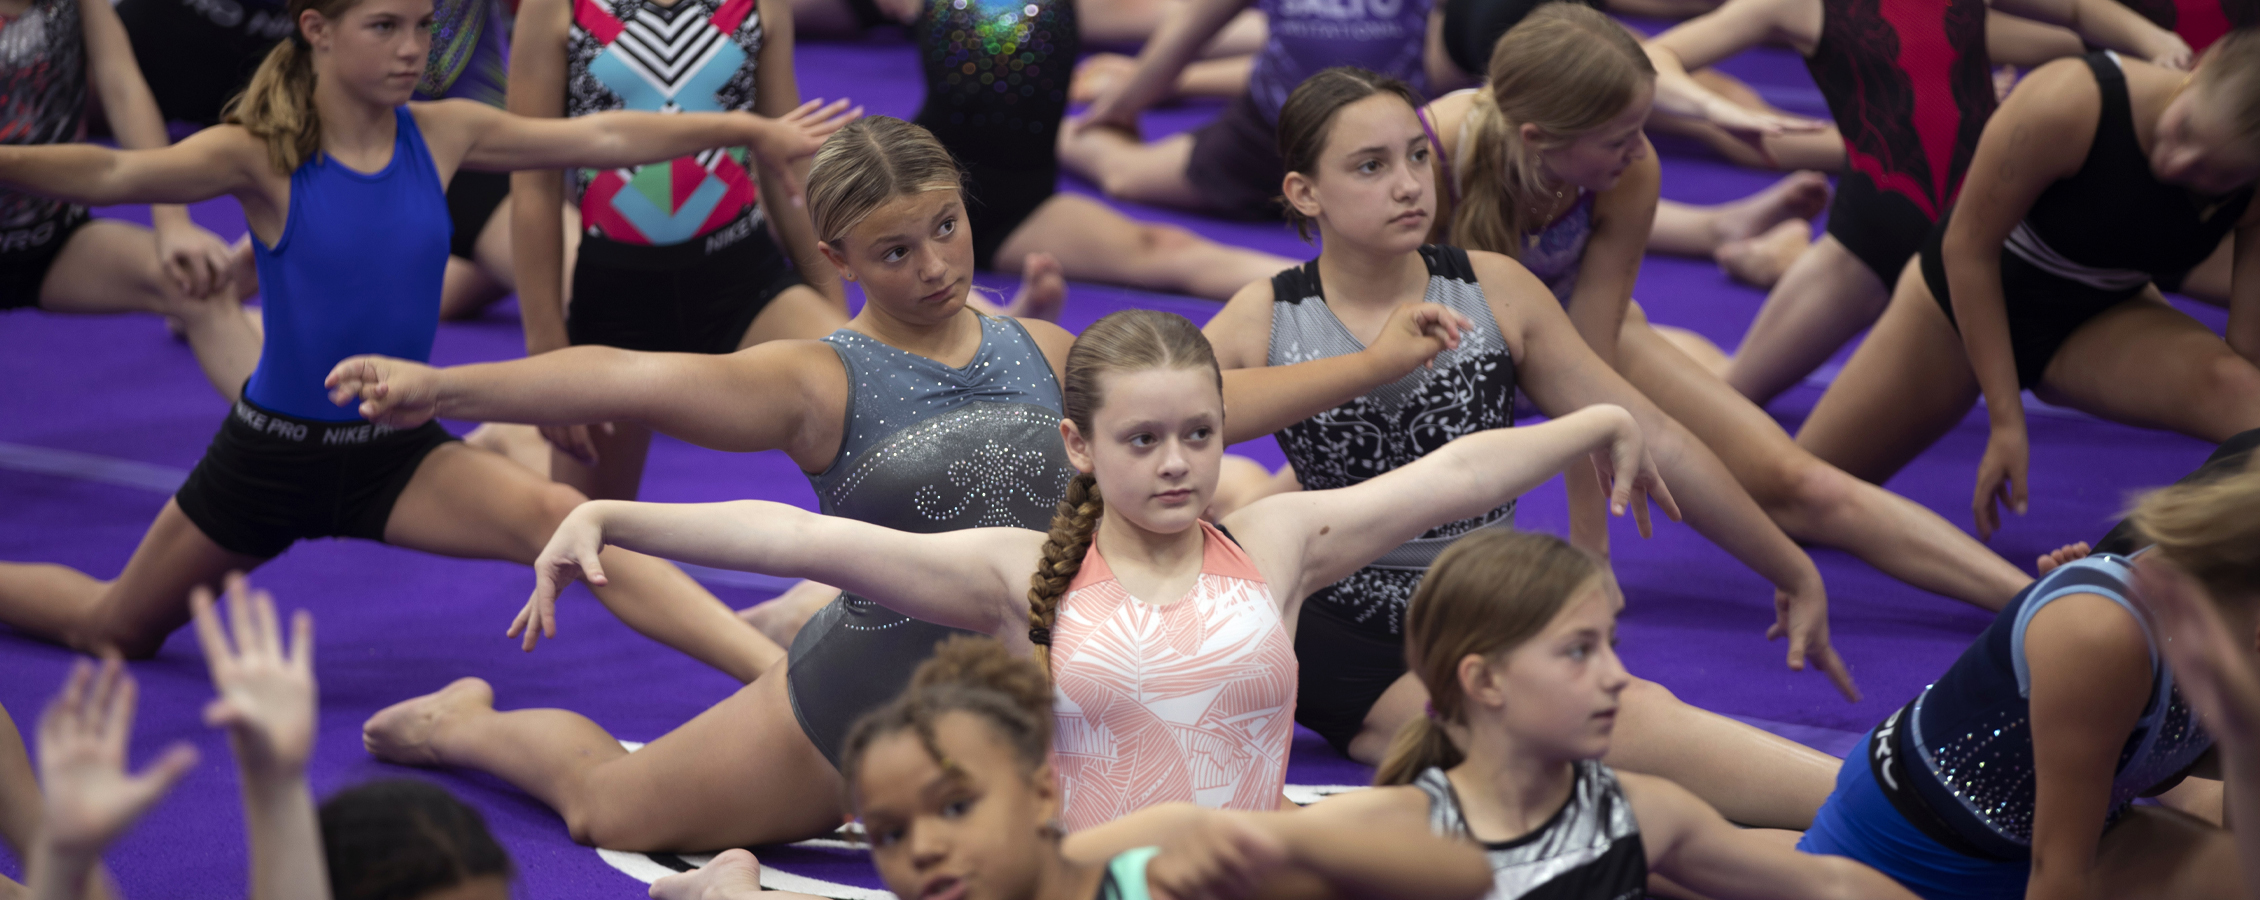 Young girls at a gymnastics camp.